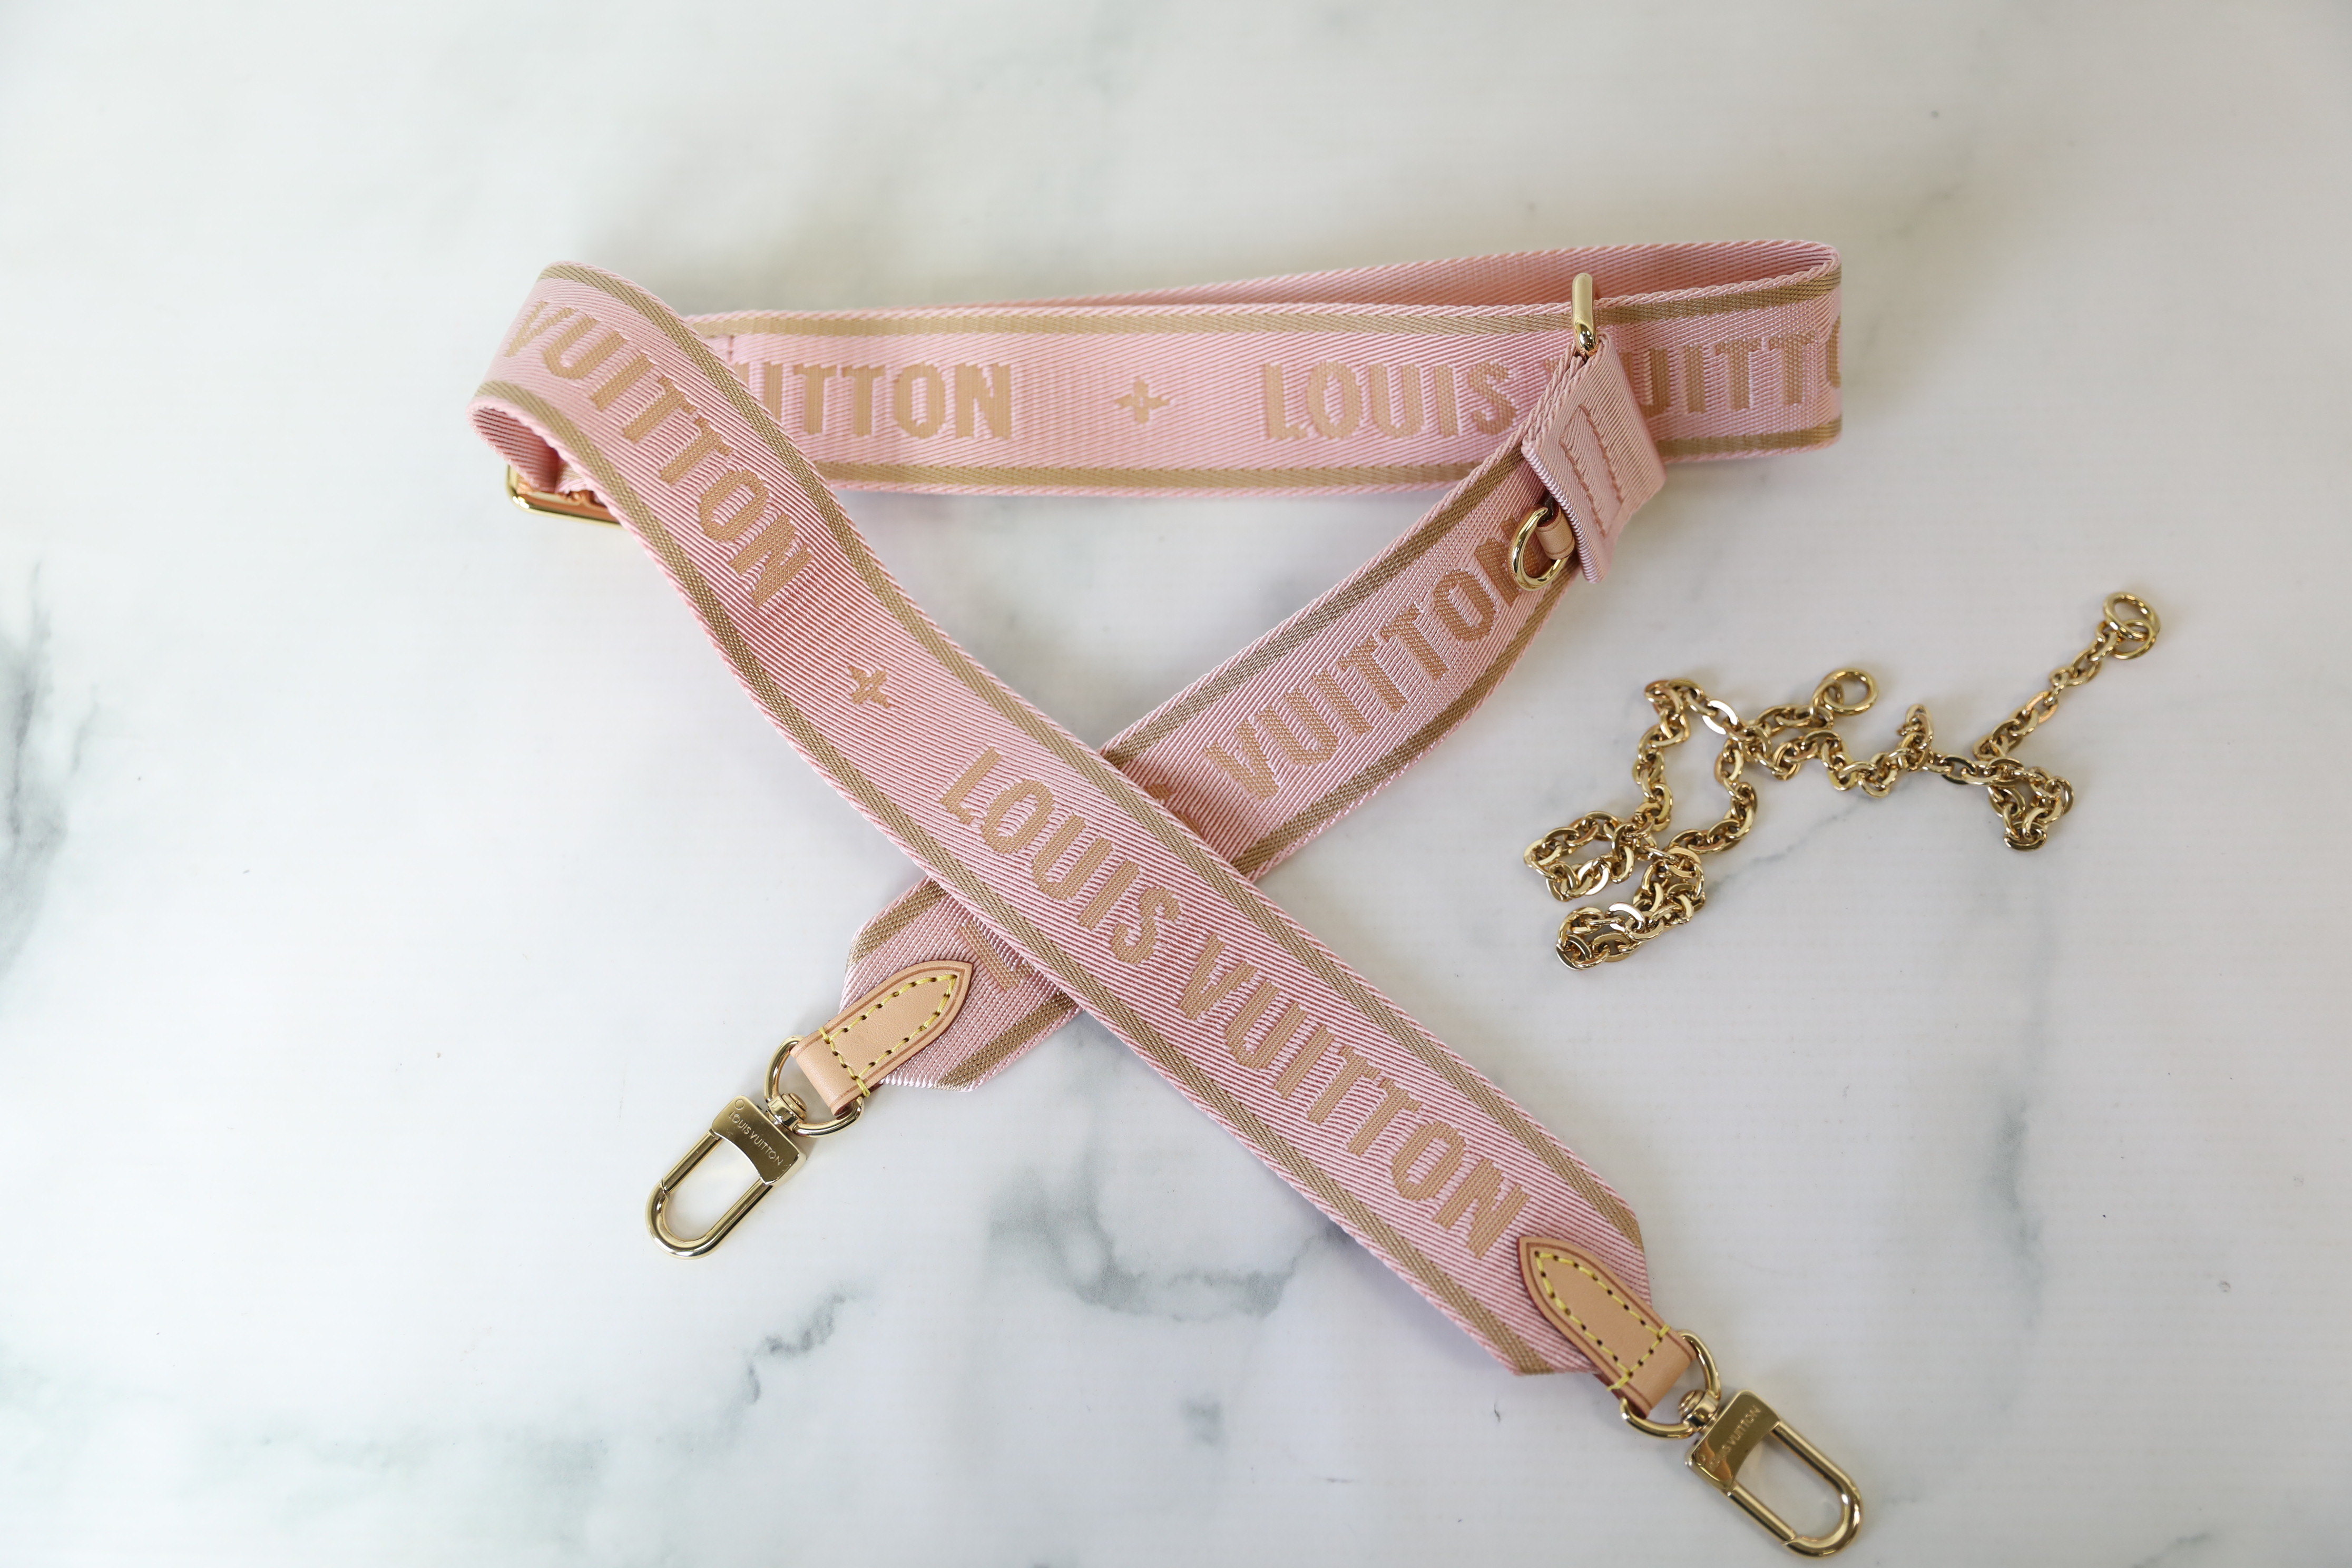 unbox a louis vuitton purse with a pink strap｜TikTok Search